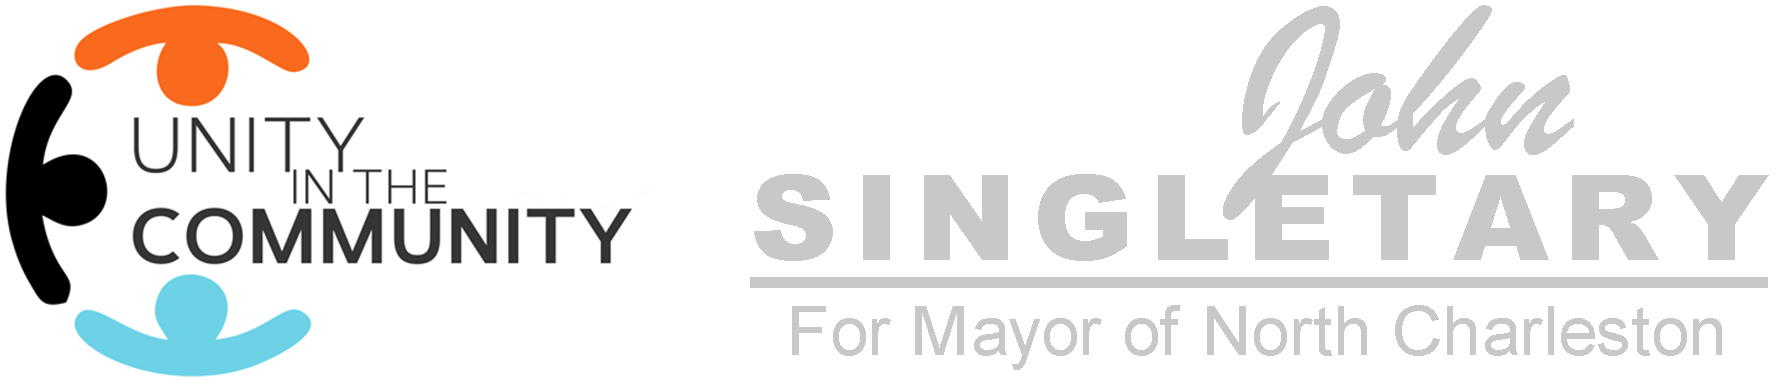 John Singletary for Mayor of North Charleston